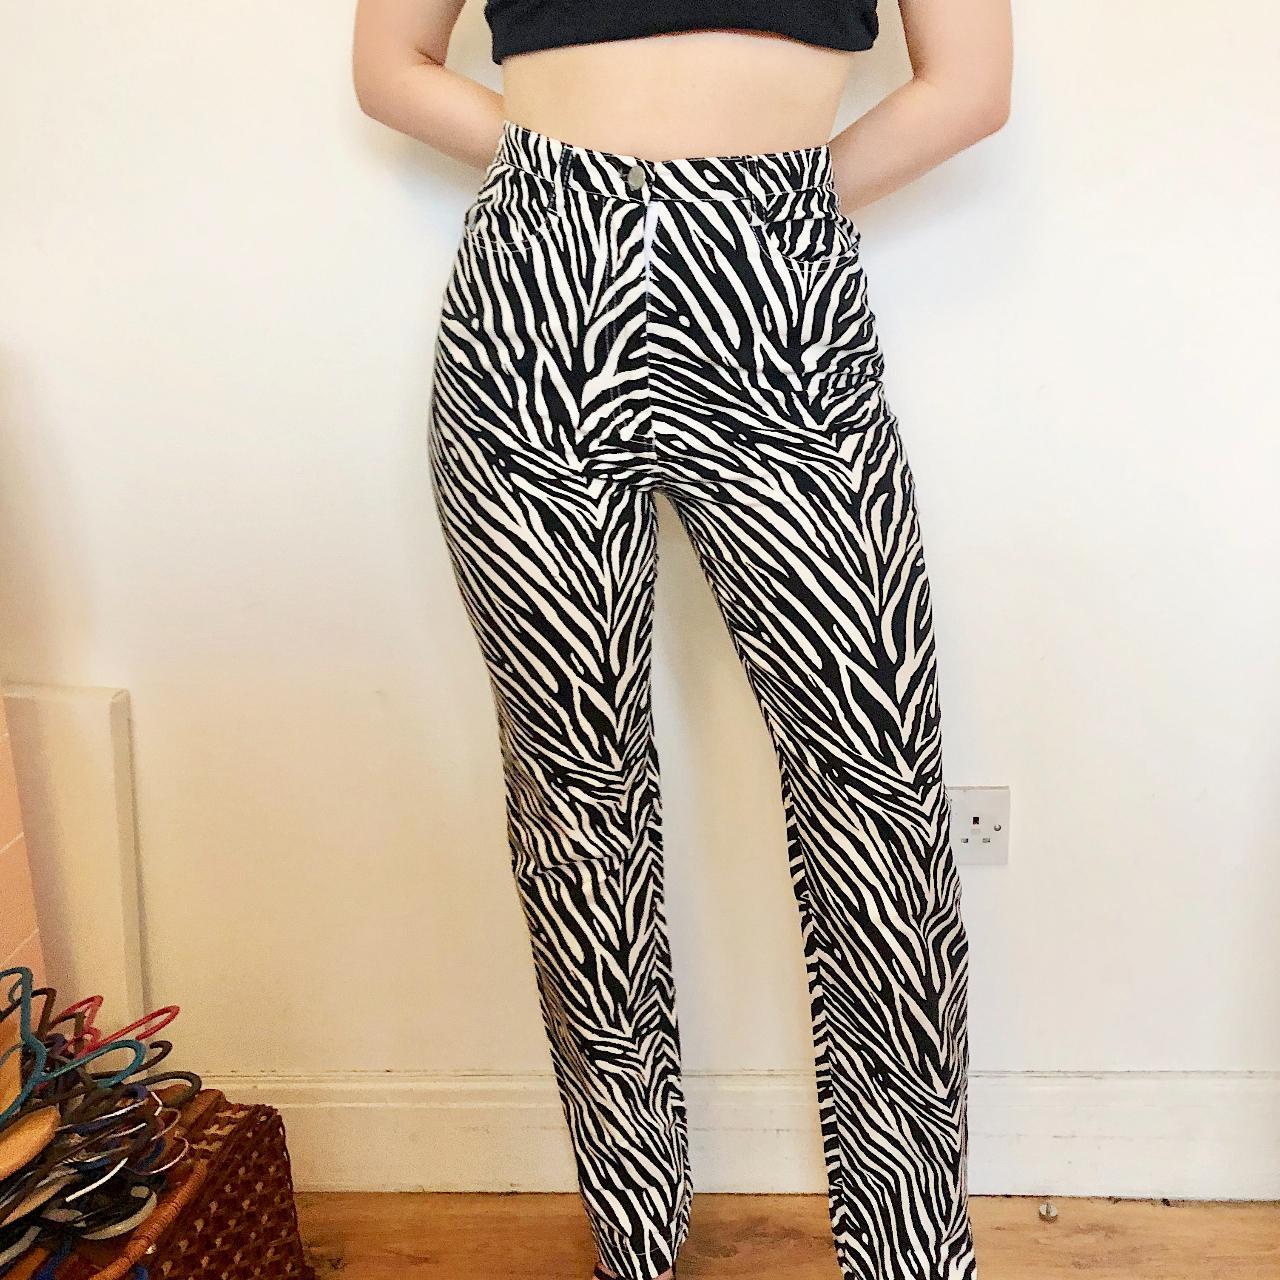 Vintage kaleidoscope zebra print trouser!!! these... - Depop